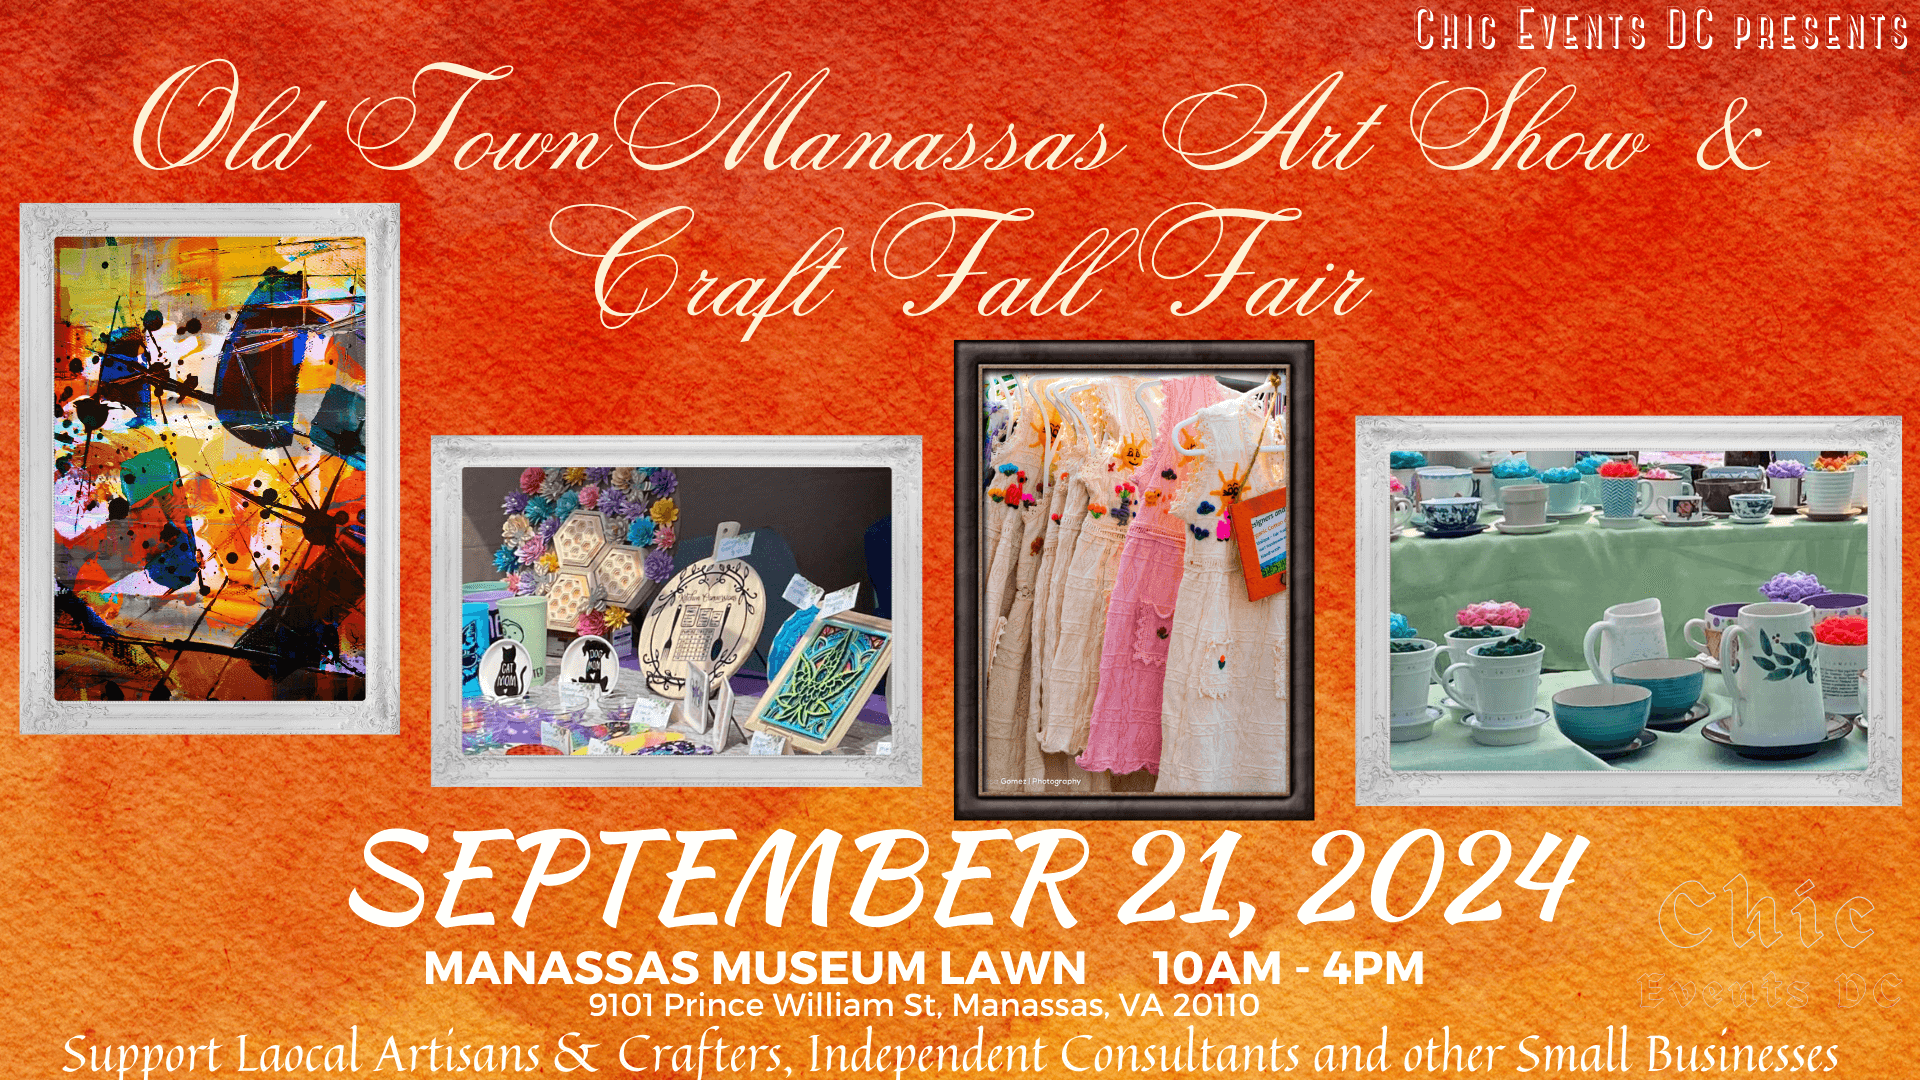 Old Town Manassas Art Show & Craft Fall Fair @ Manassas Museum., Manassas City, Virginia, United States